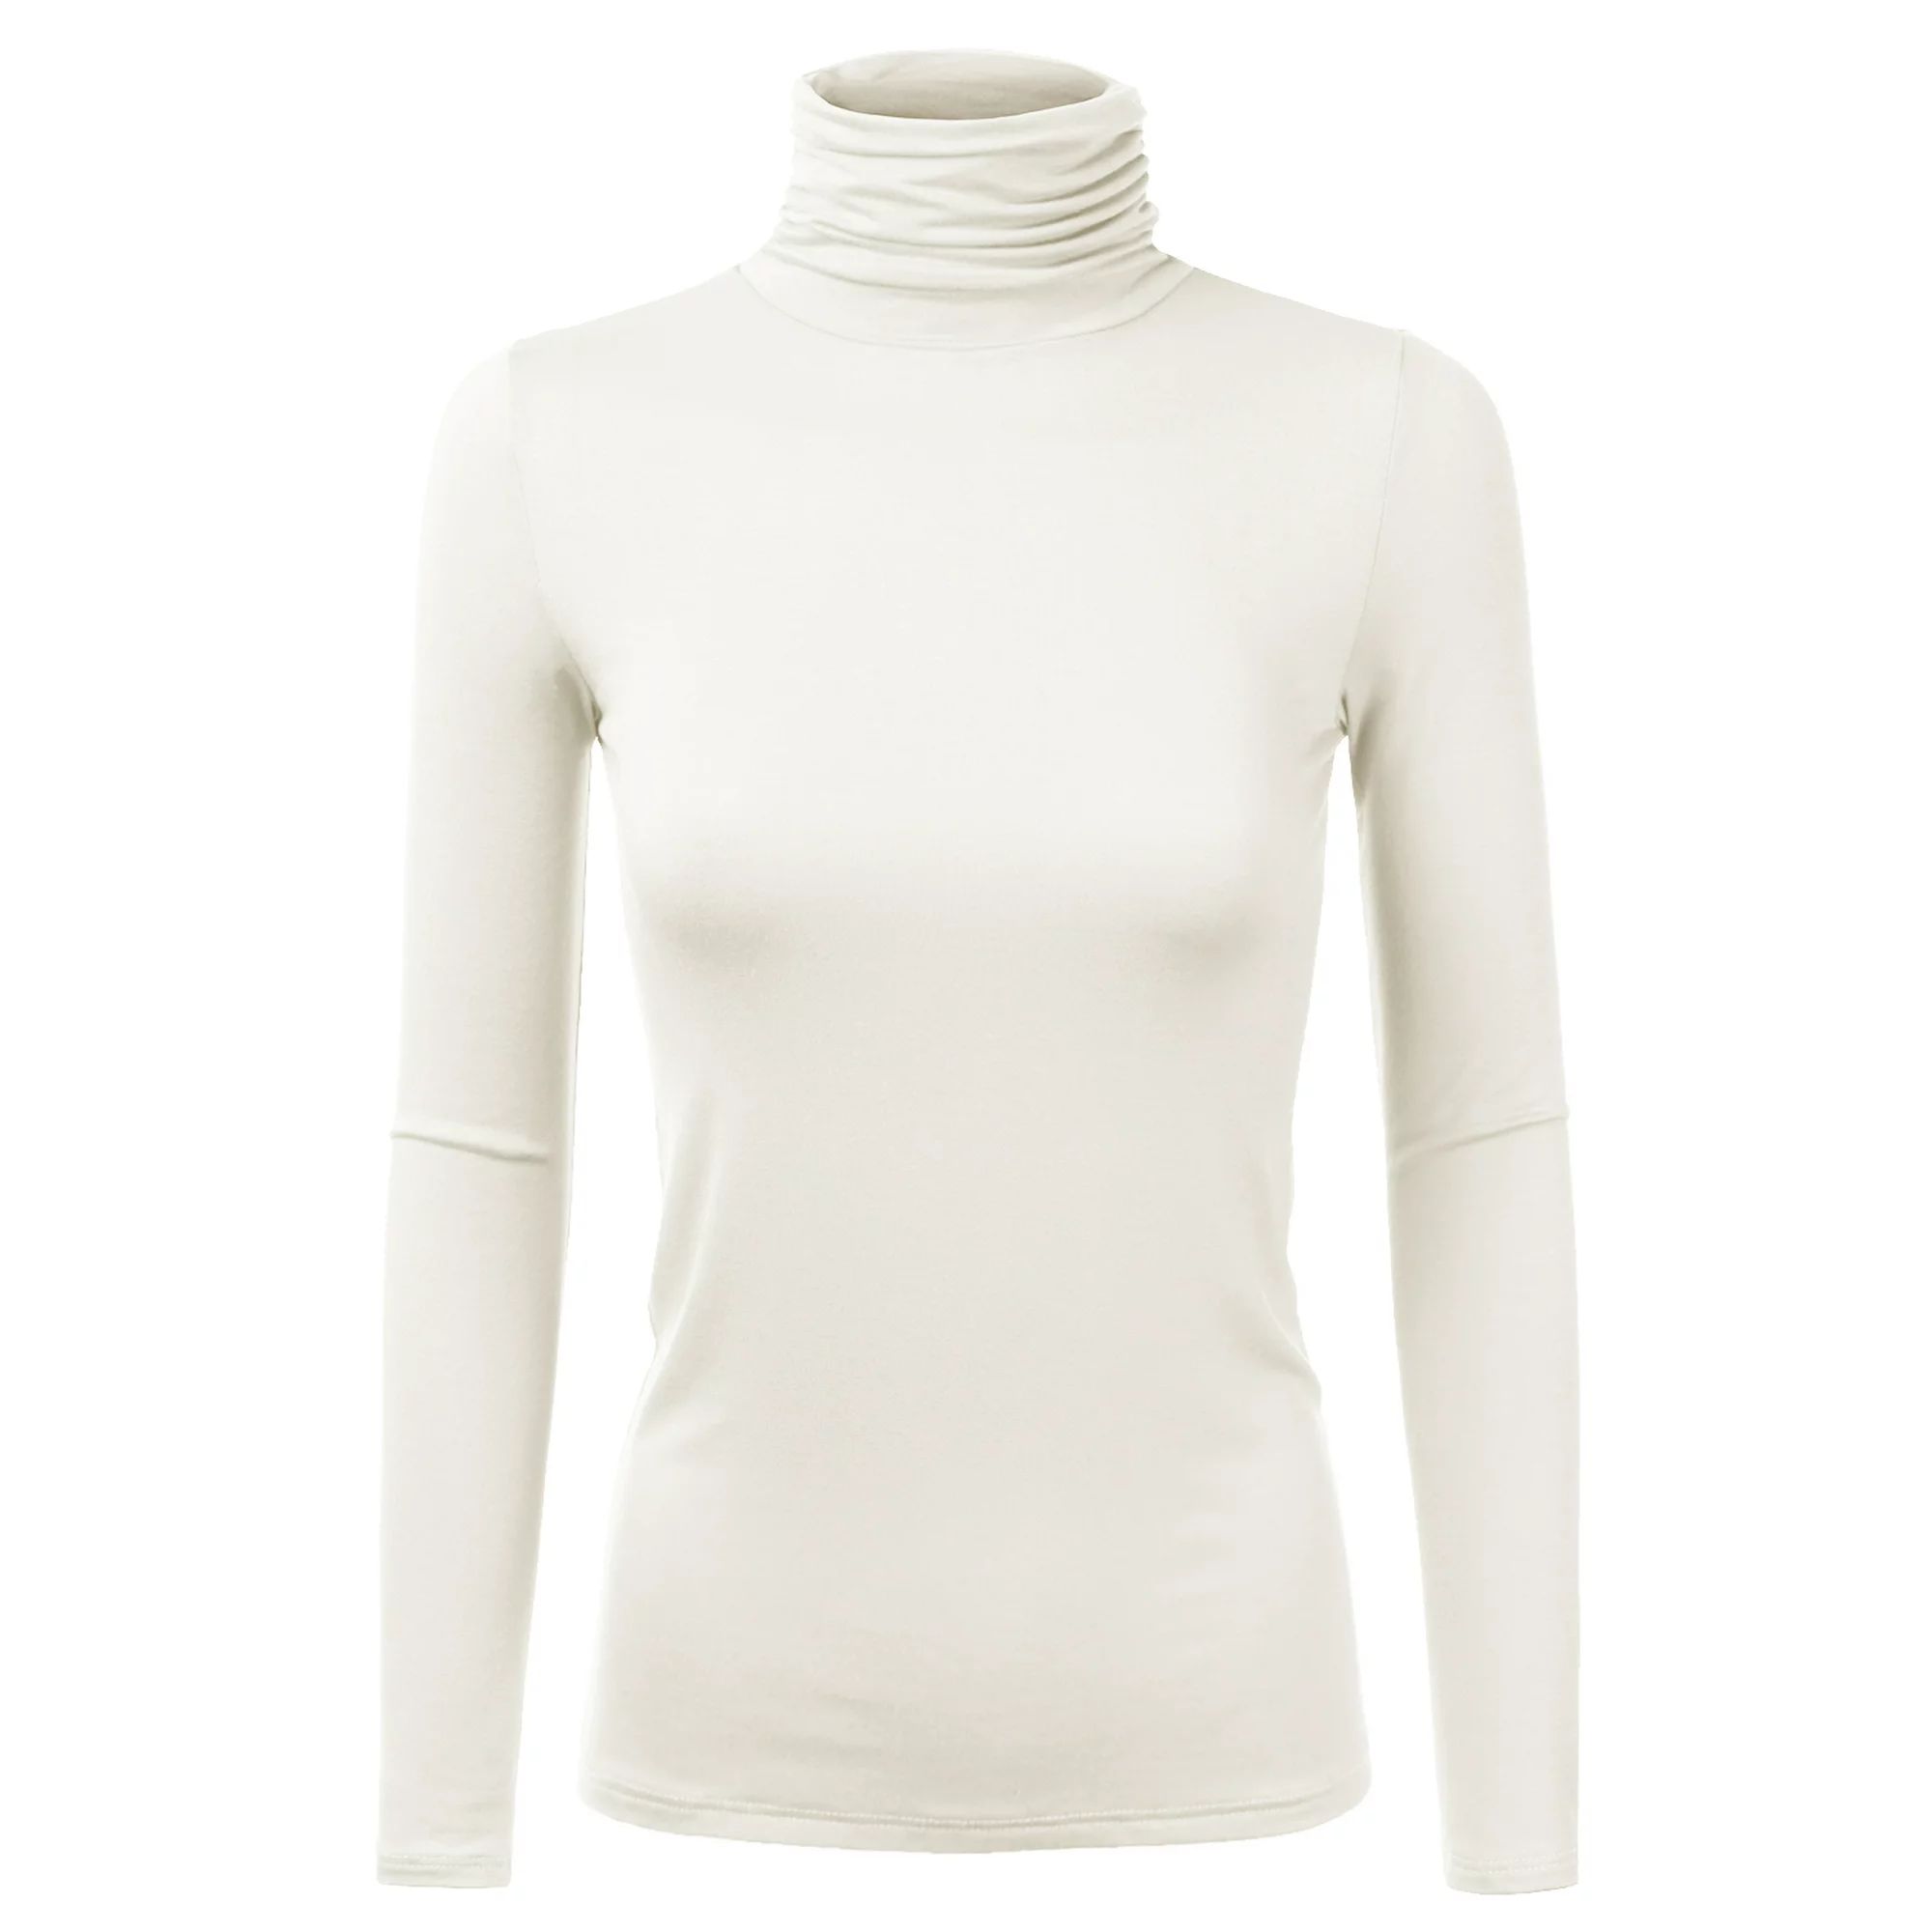 Doublju Women's Basic Slim Fit Sweater Long Sleeve Turtleneck T-Shirt Top Pullover | Walmart (US)